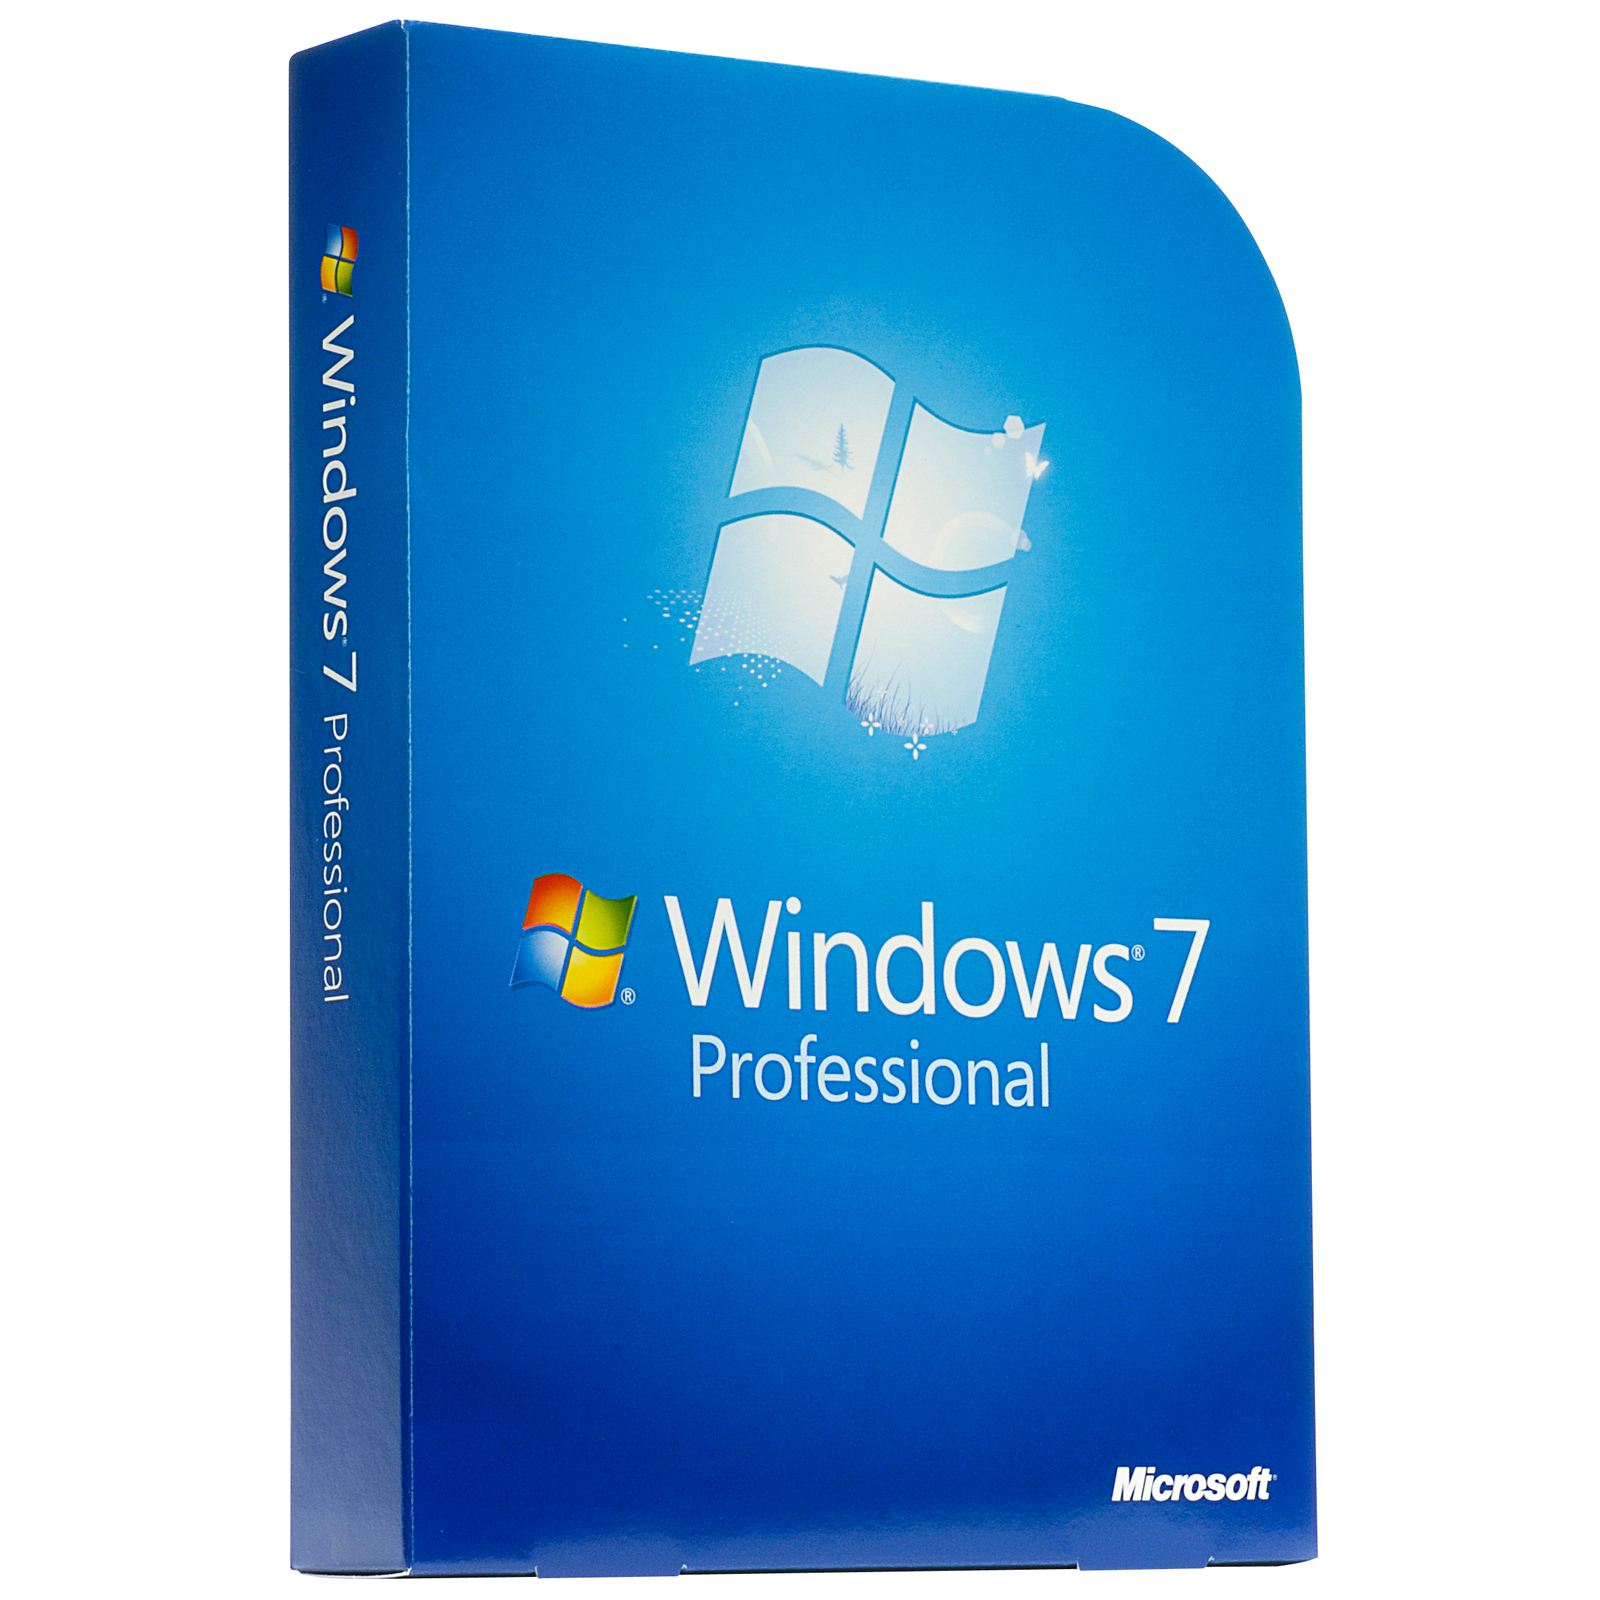 windows 7 pro iso download free